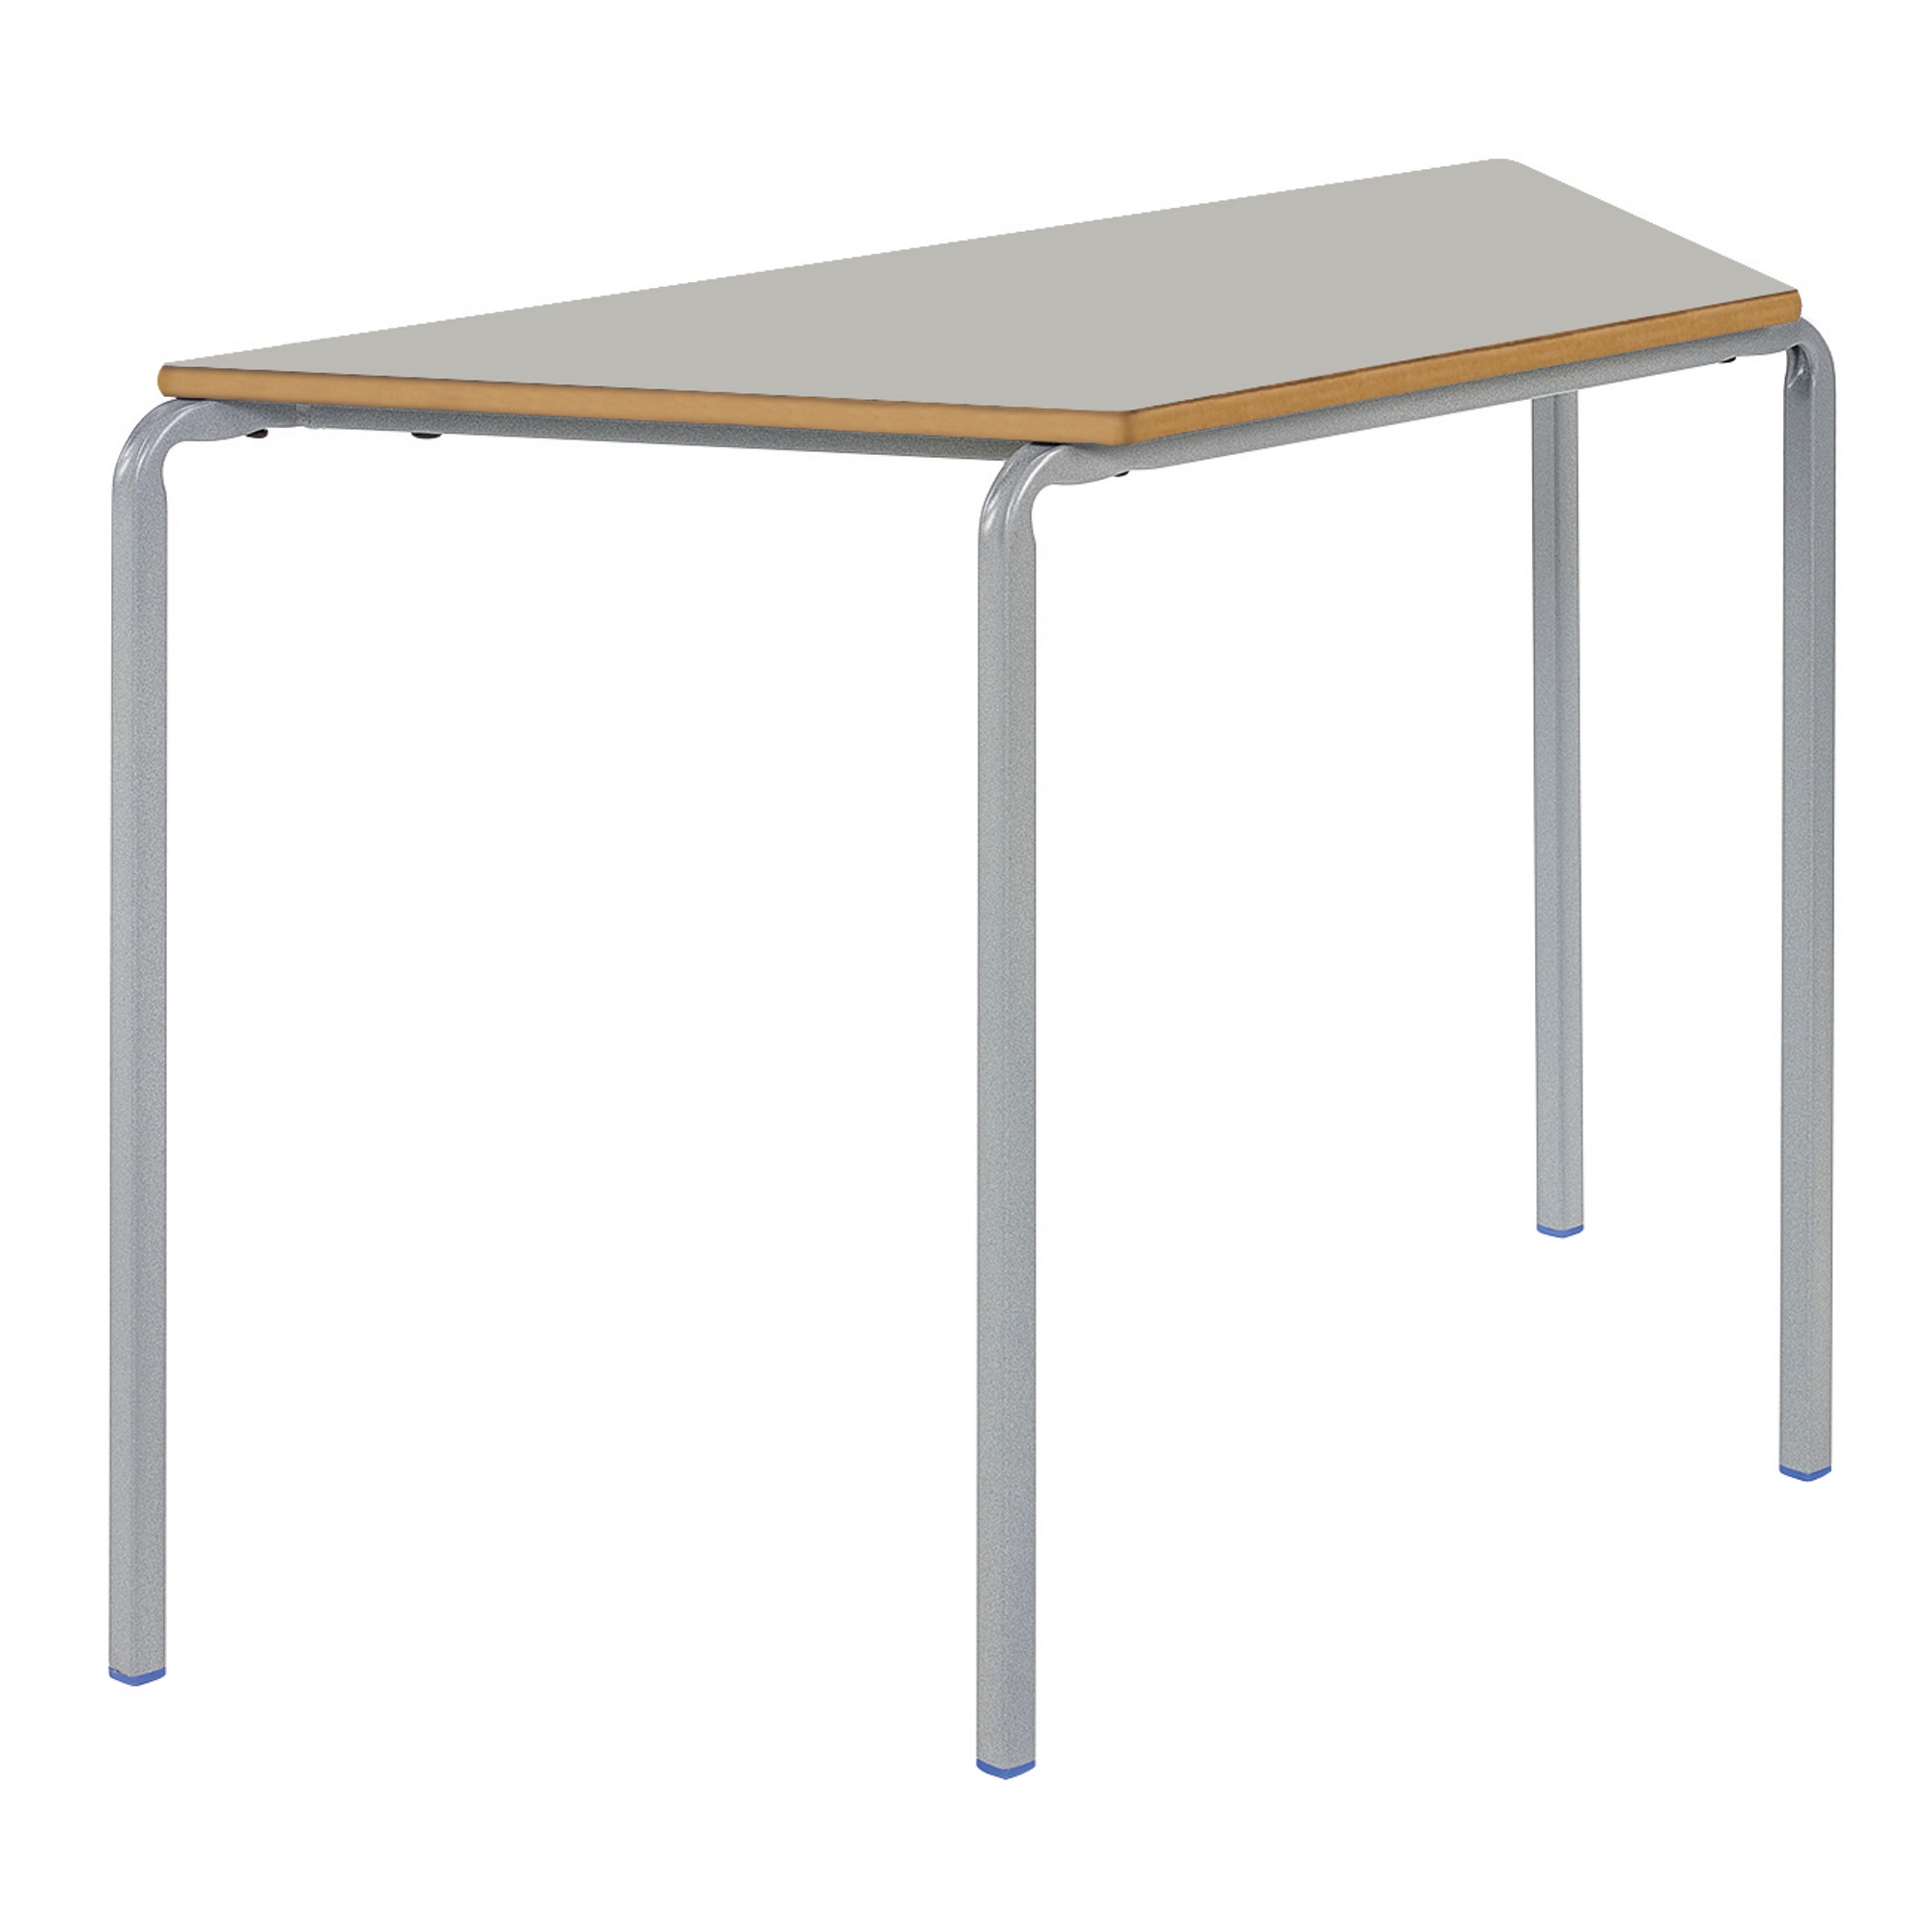 Classmates Trapezoidal Crushed Bent Classroom Table - 1100 x 550 x 530mm - Grey